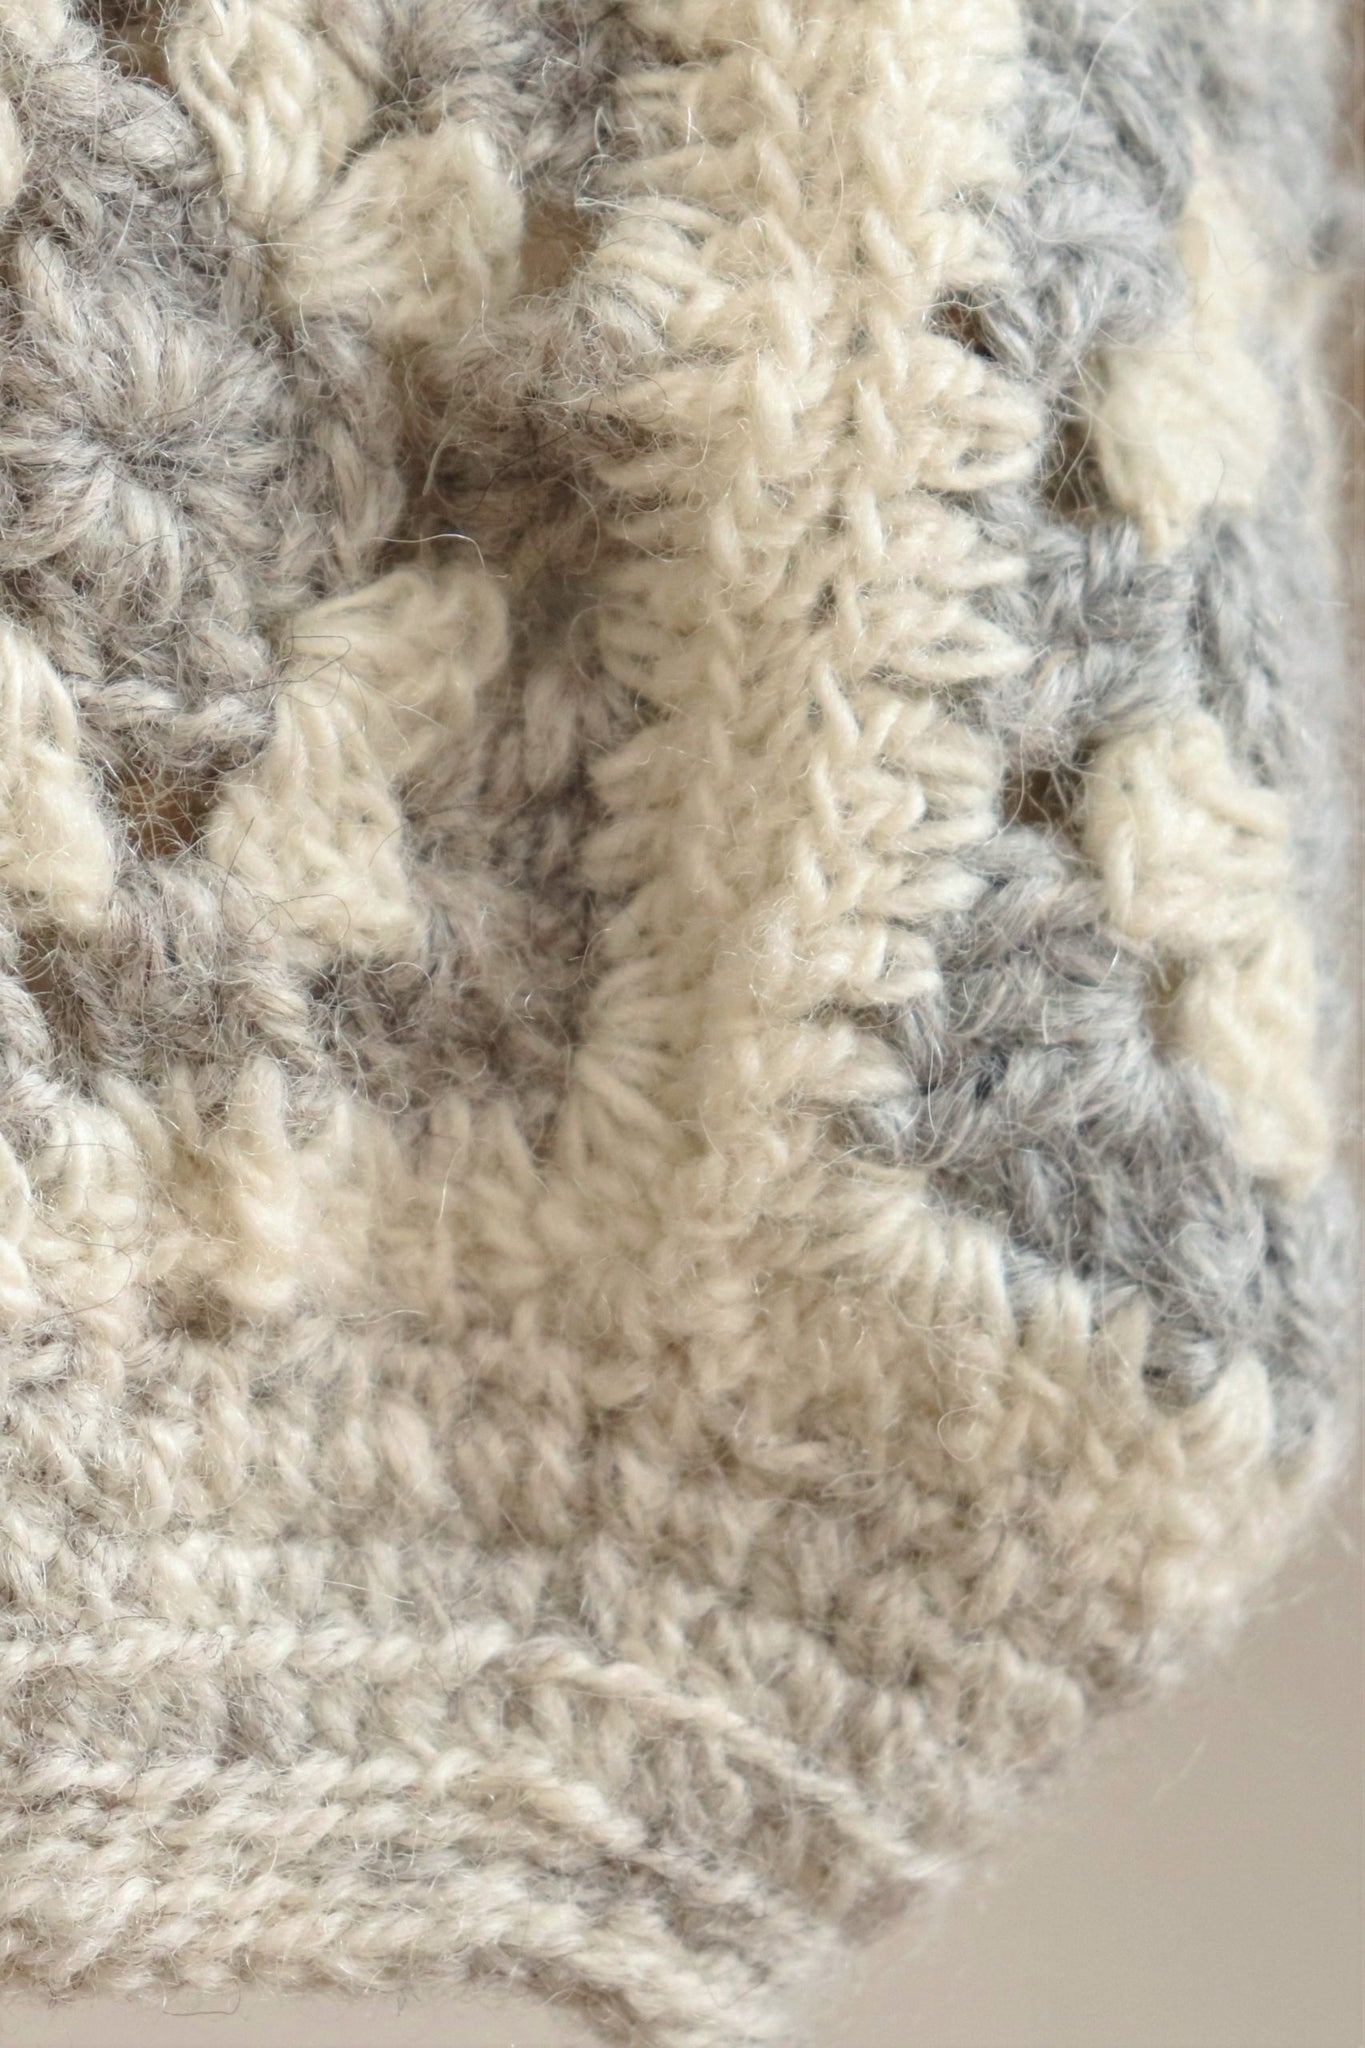 Vintage Crochet Knit wool Cardigan